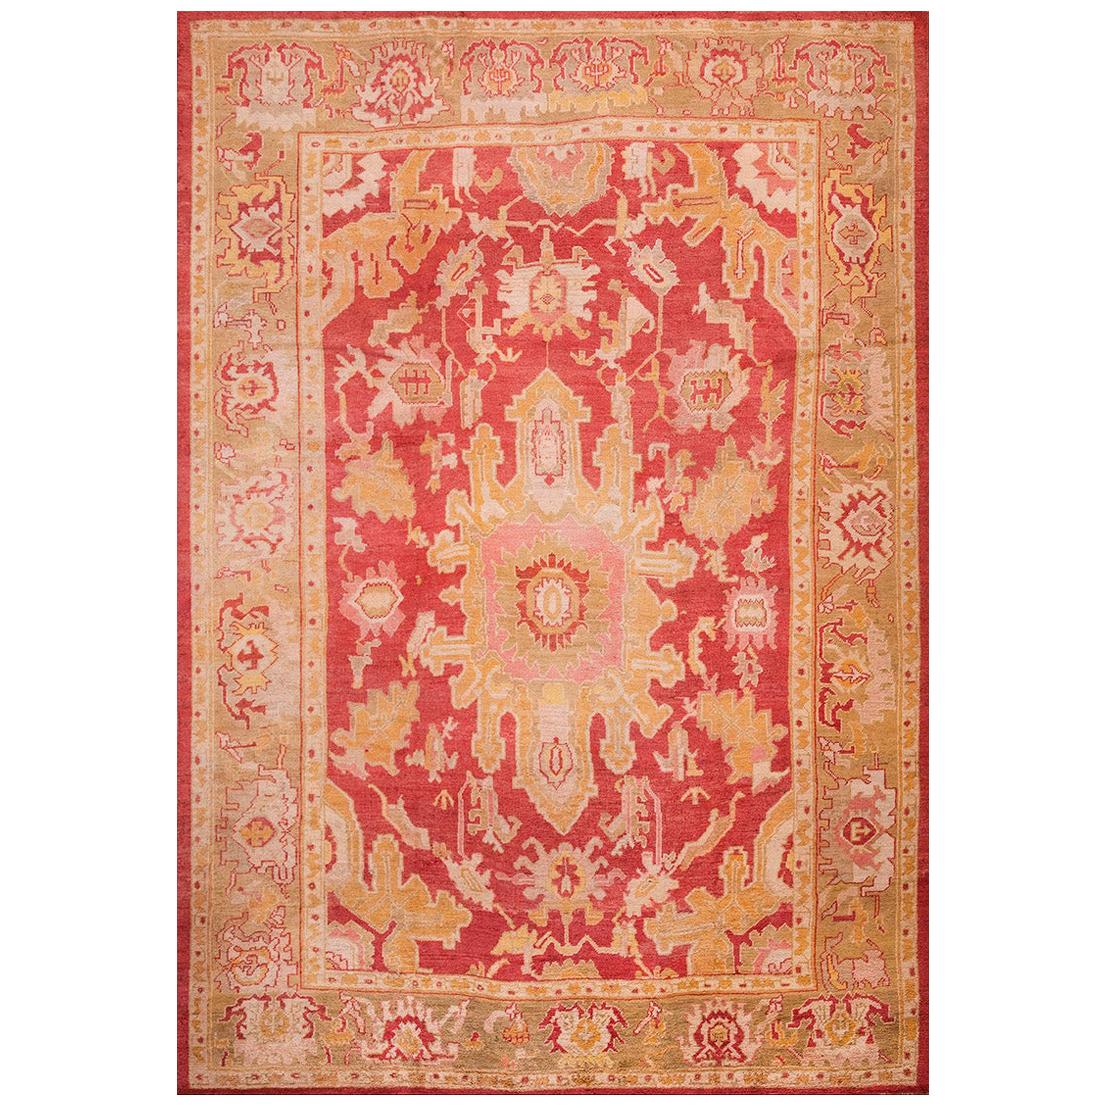 19th Century Turkish Oushak Carpet ( 9'4" x 13'4" - 285 x 406 )